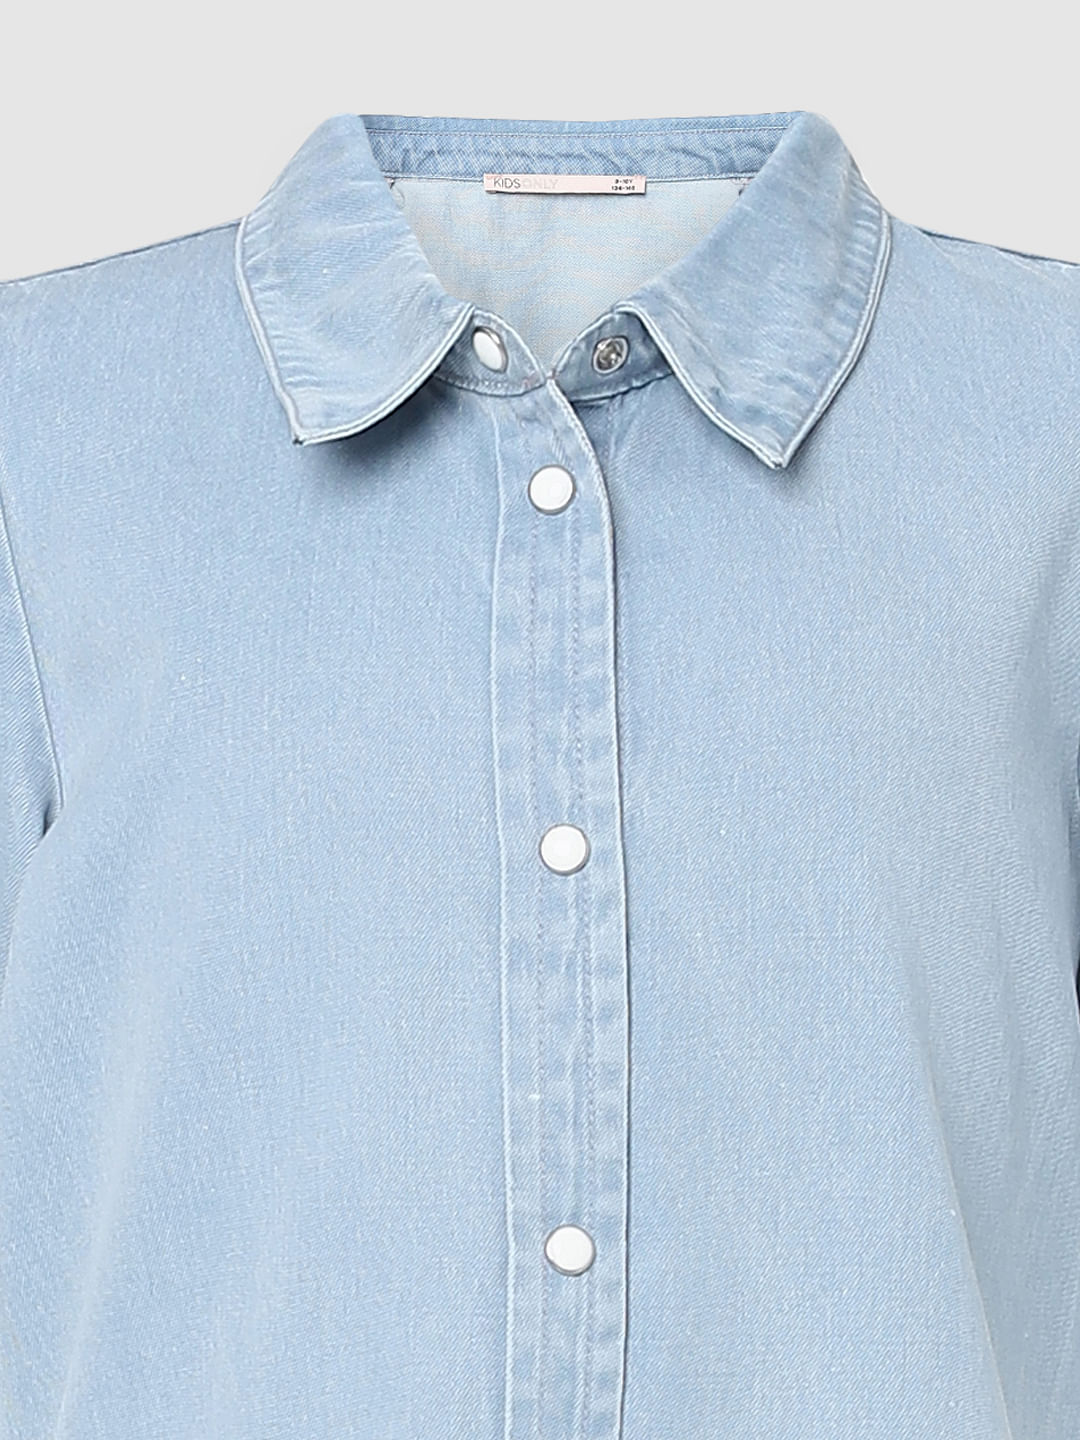 Dubinik Men's Sleeveless Denim Shirt Button Down Cowboy Lightweight Jean  Vest at Amazon Men's Clothing store